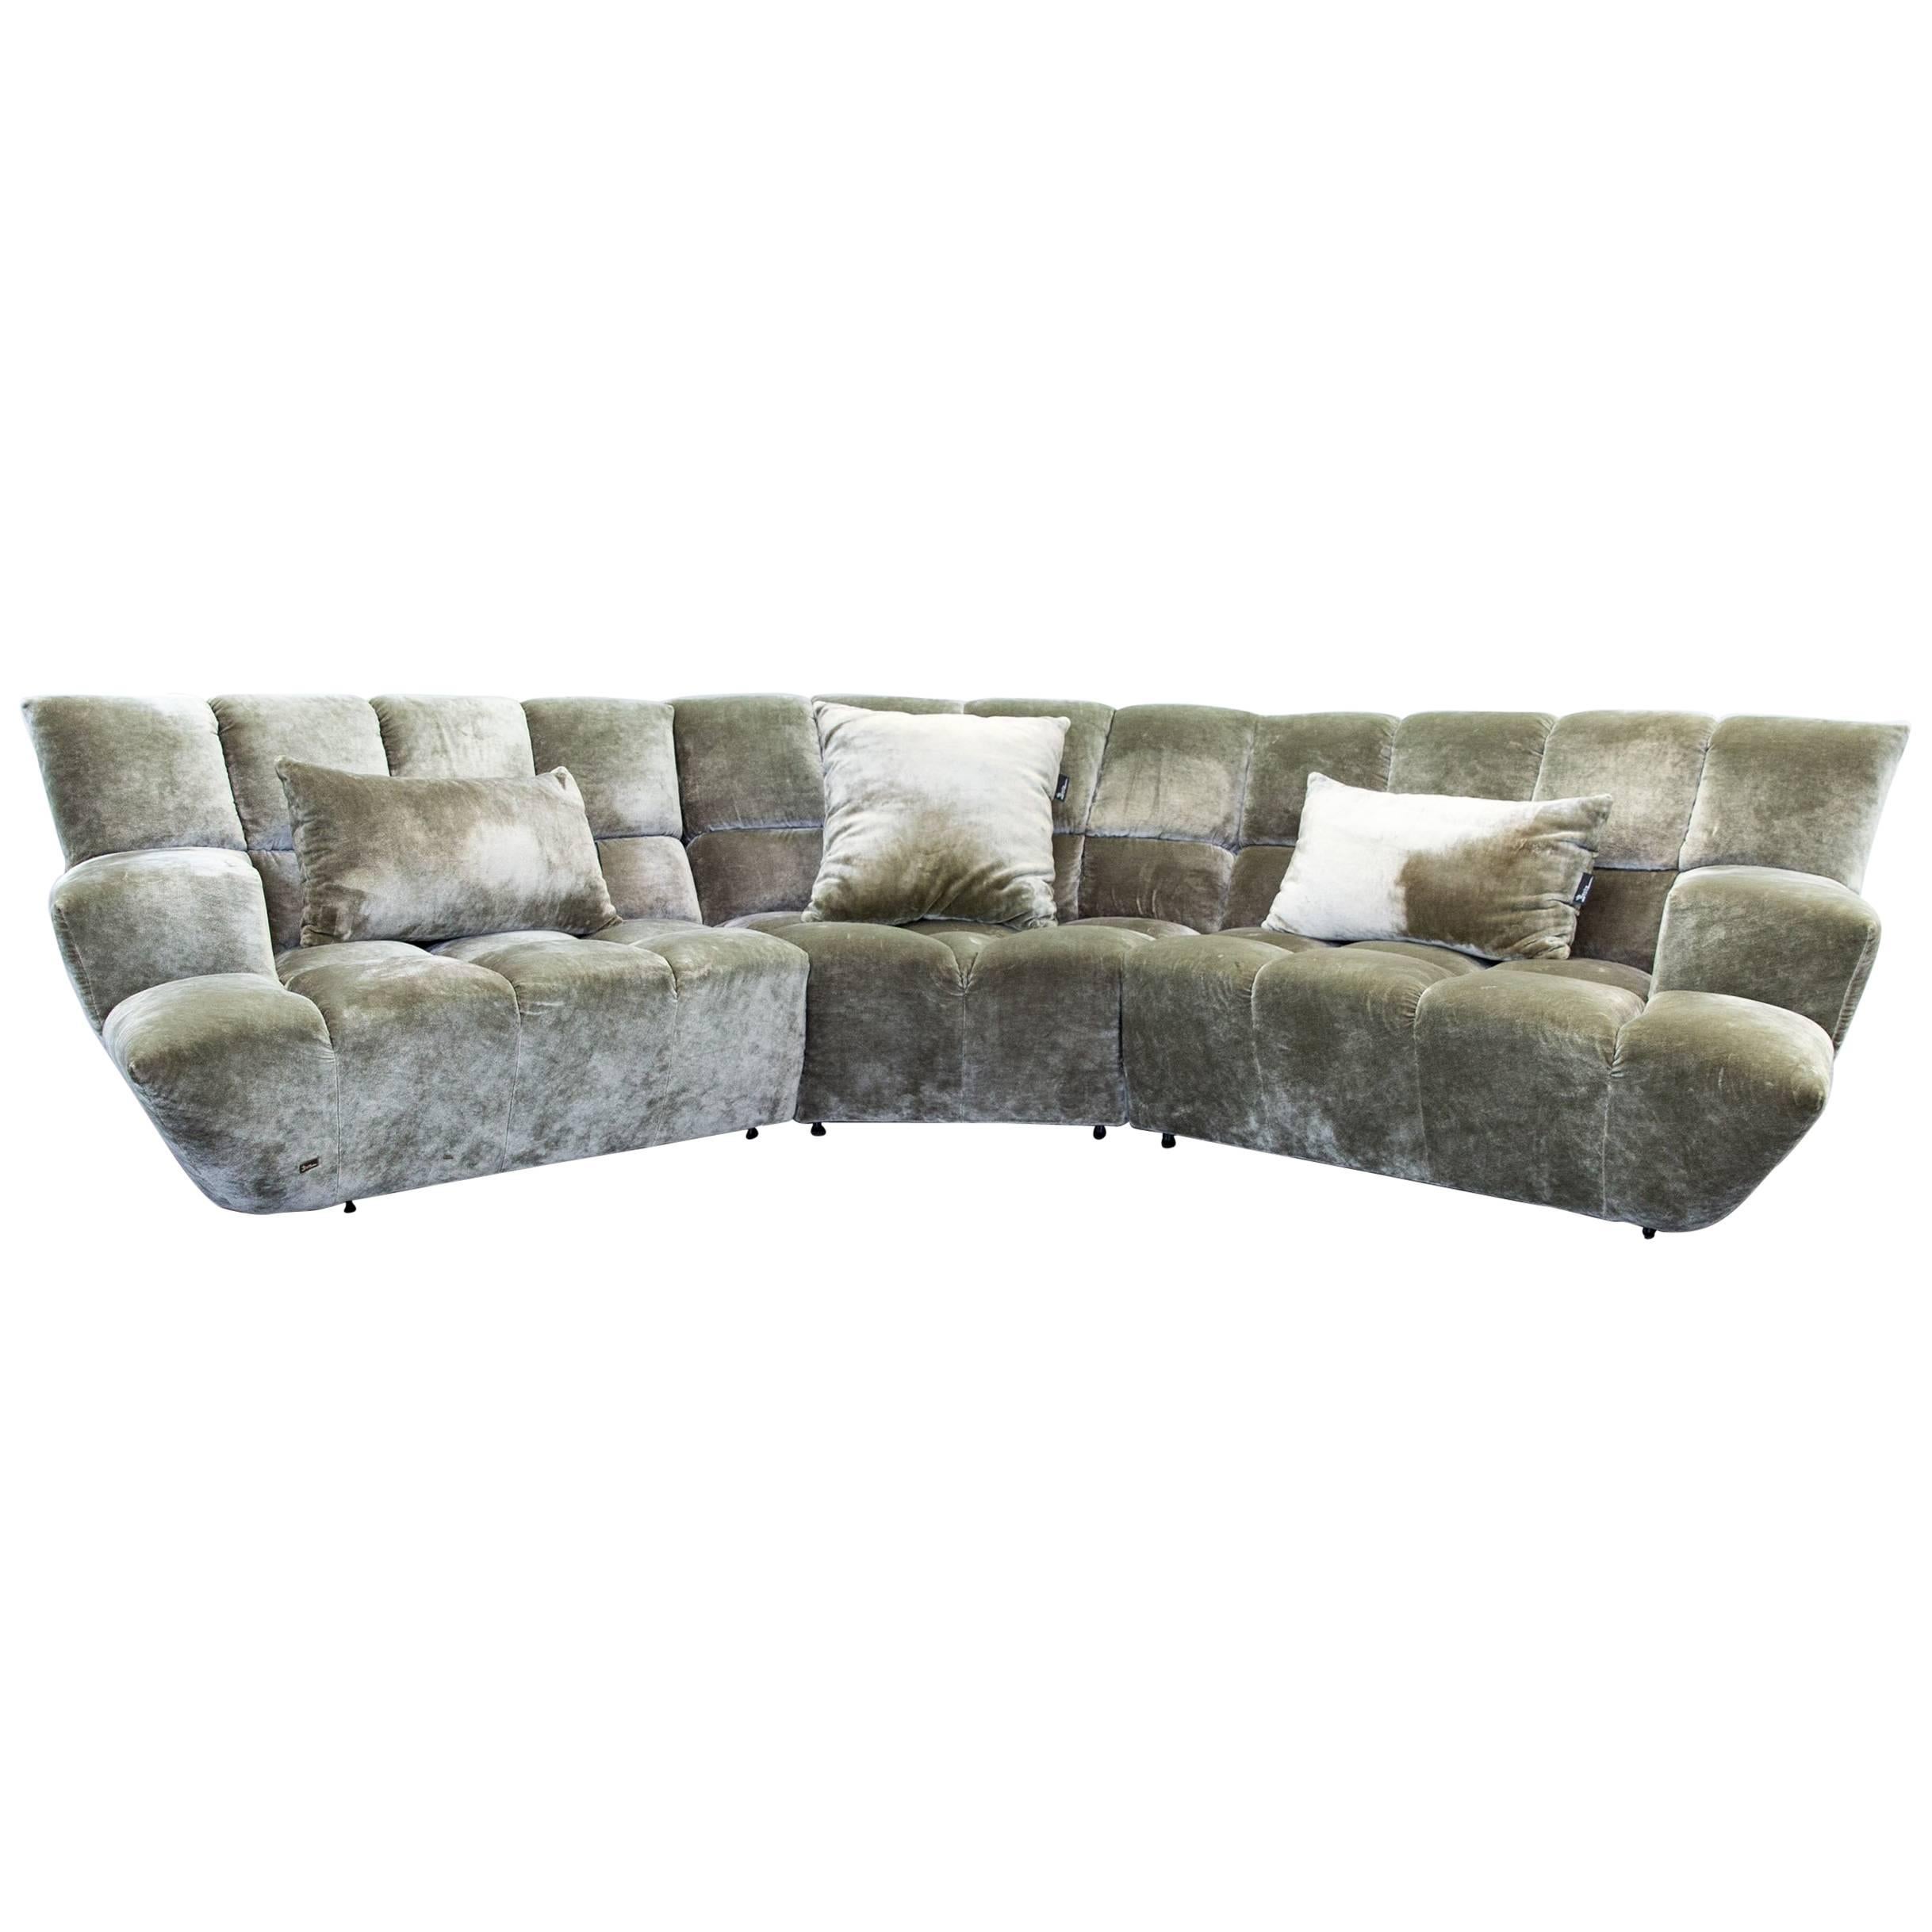 Bretz Cloud 7 Designer Cornersofa Silver Green Fabric Couch Modern